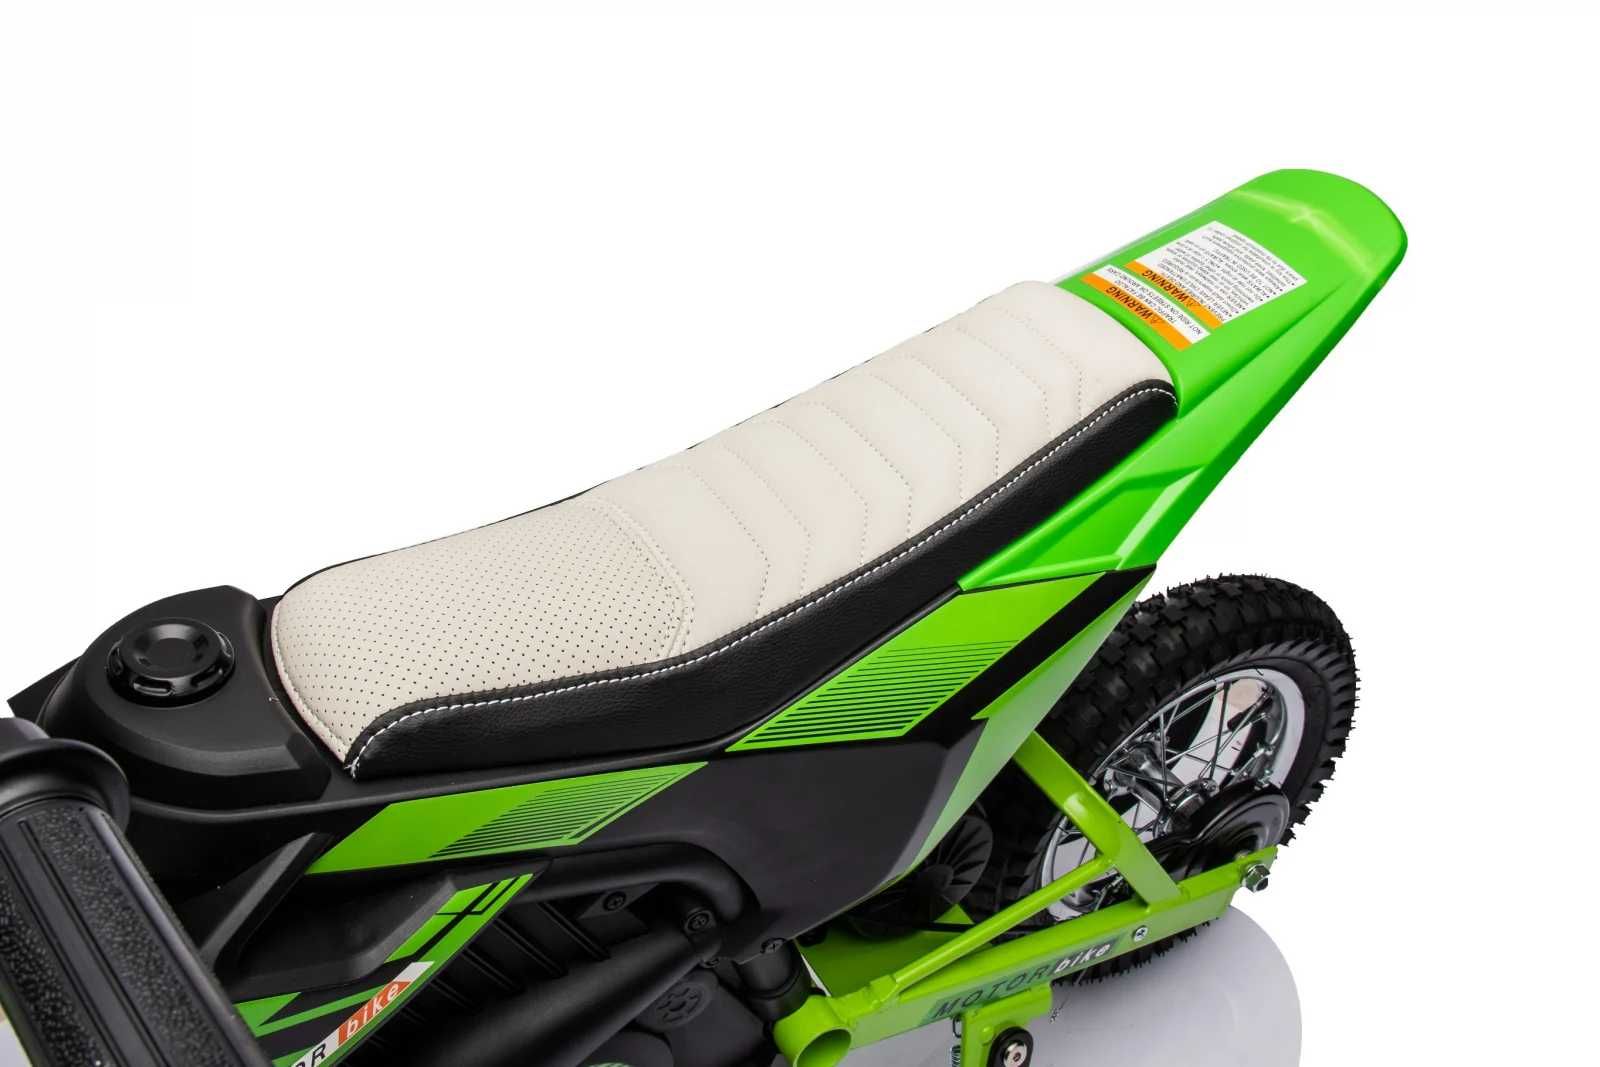 Motocicleta electrica copii 4-9 ani Enduro 250W 24V cu anvelope #Verde